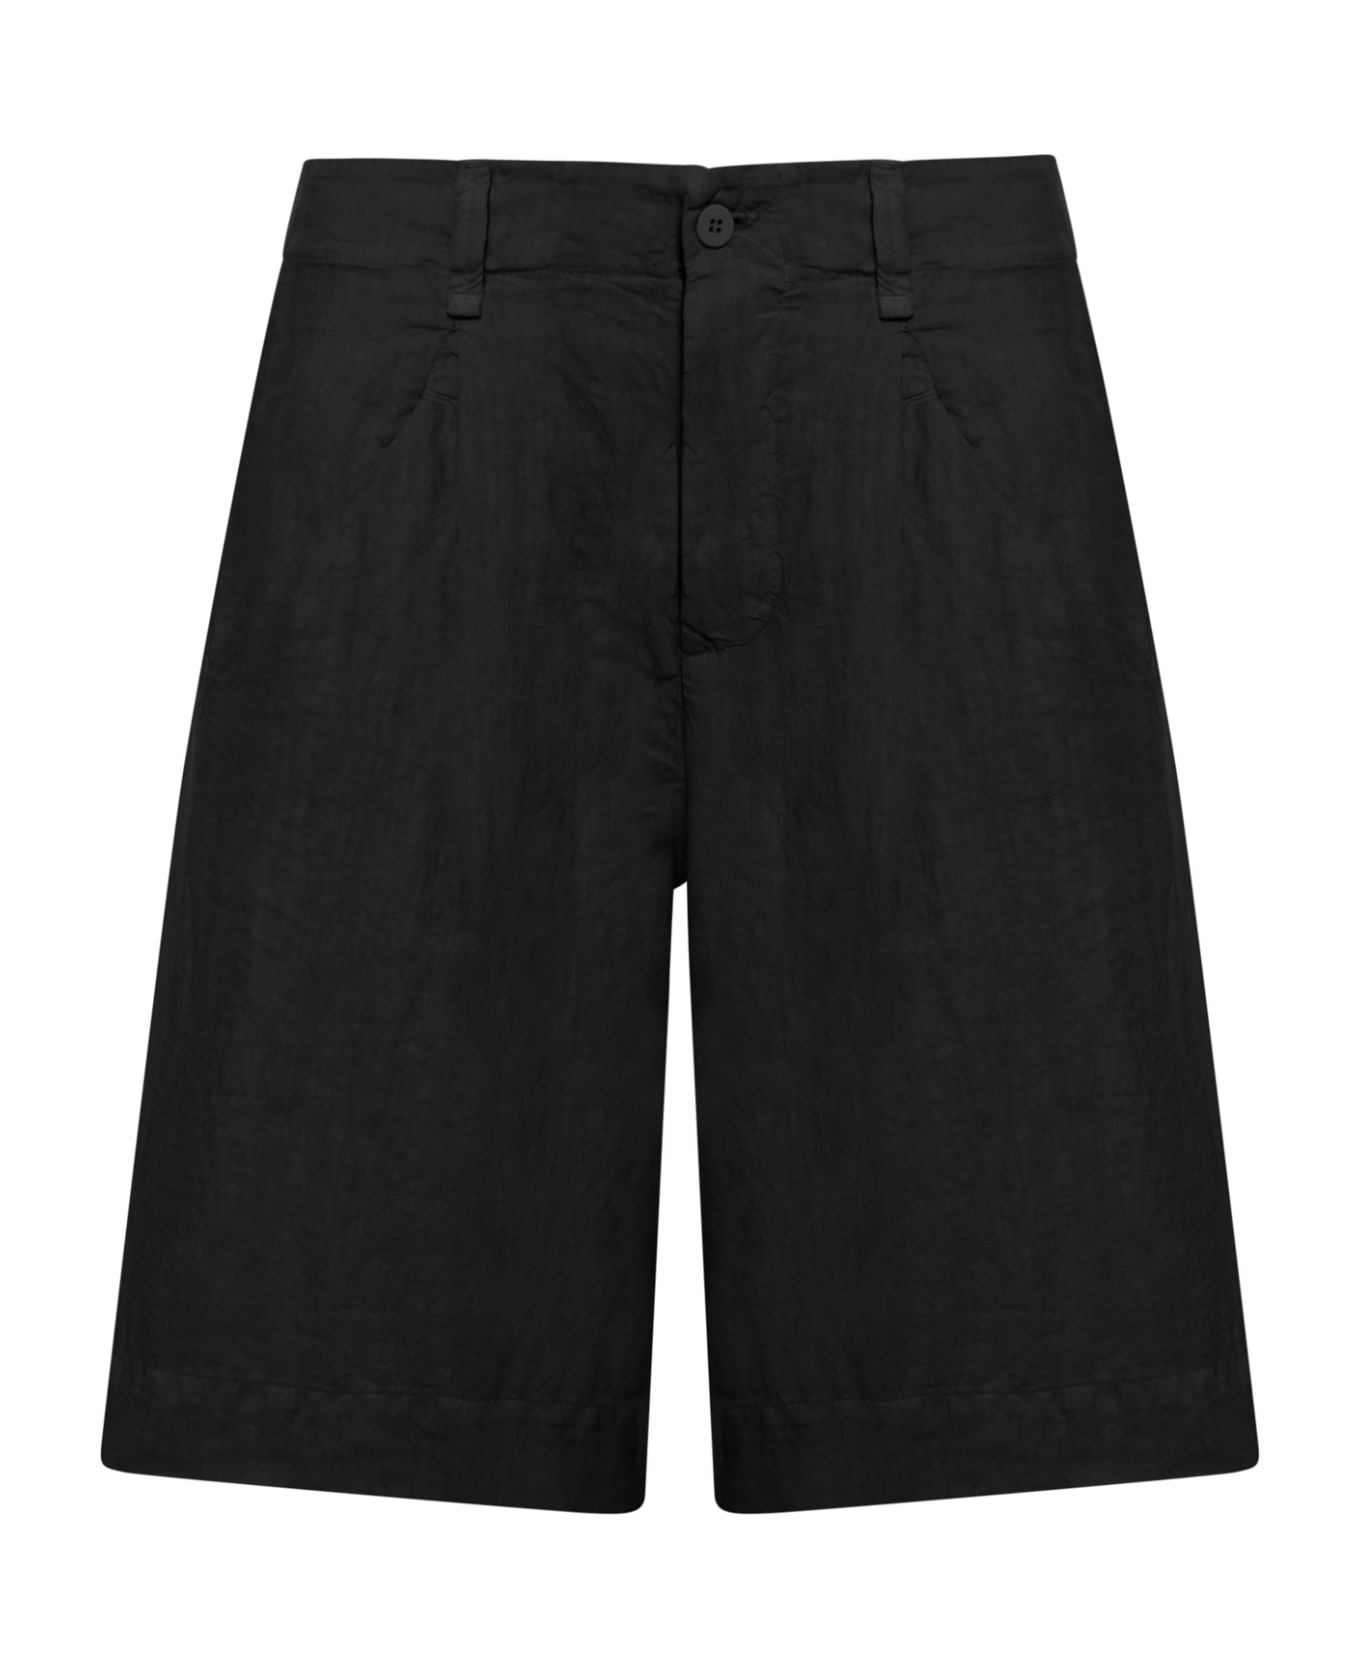 Transit Shorts - Black ショートパンツ